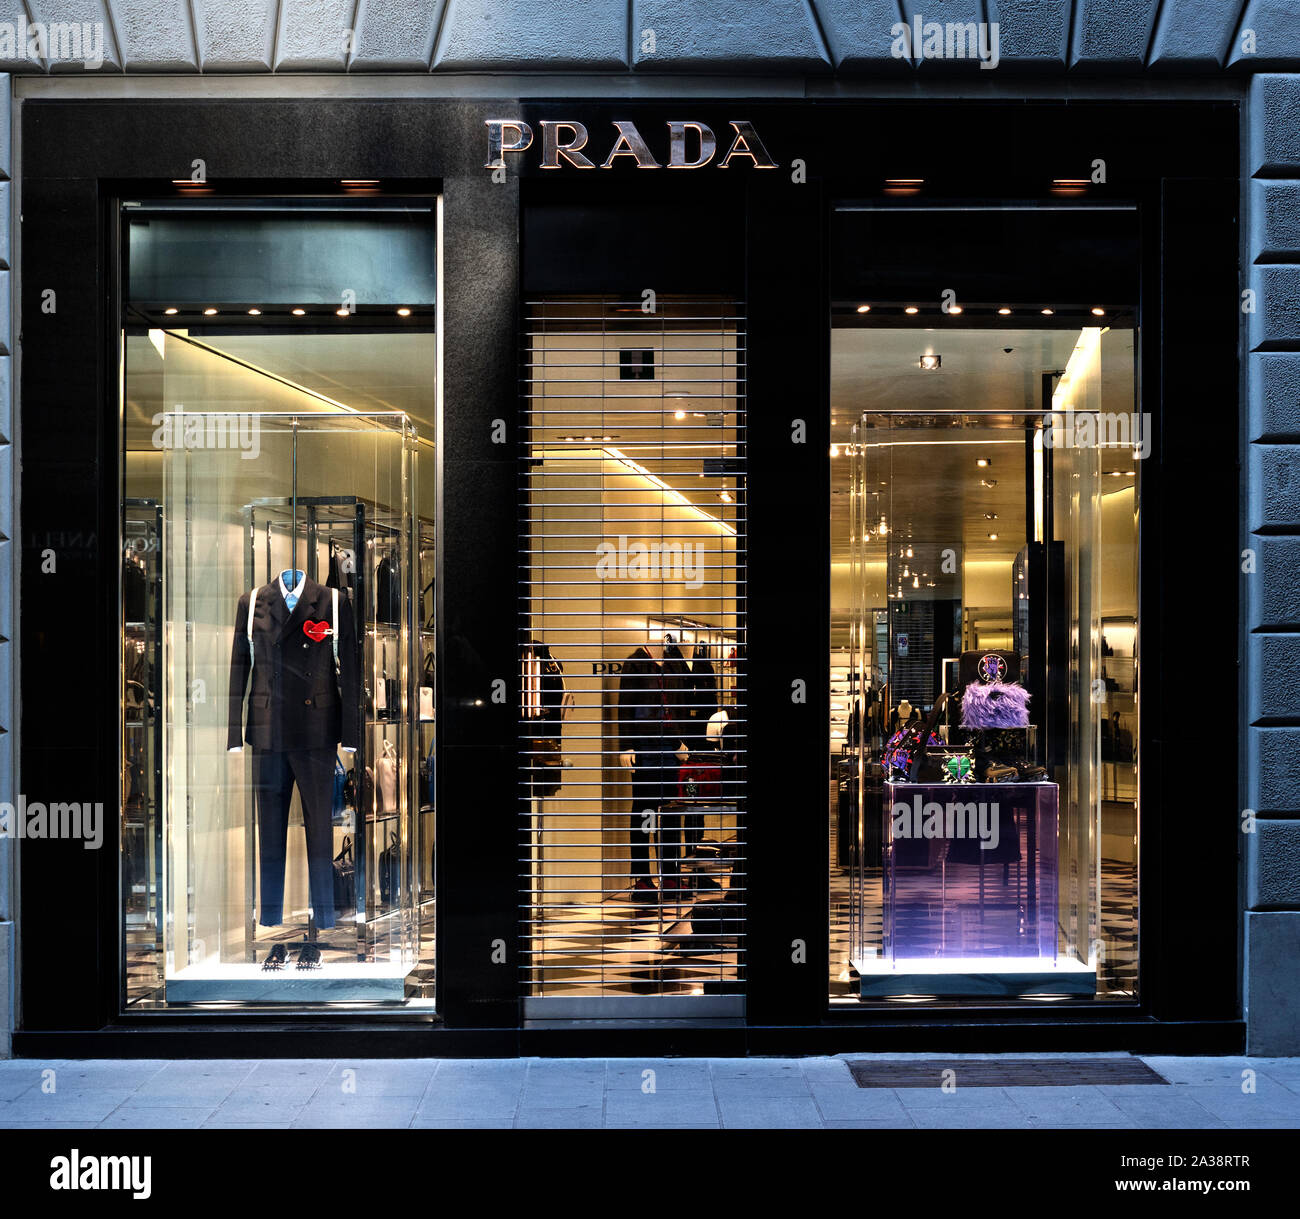 prada, italian luxury fashion house, store, shop, business, company, italy Stock Photo